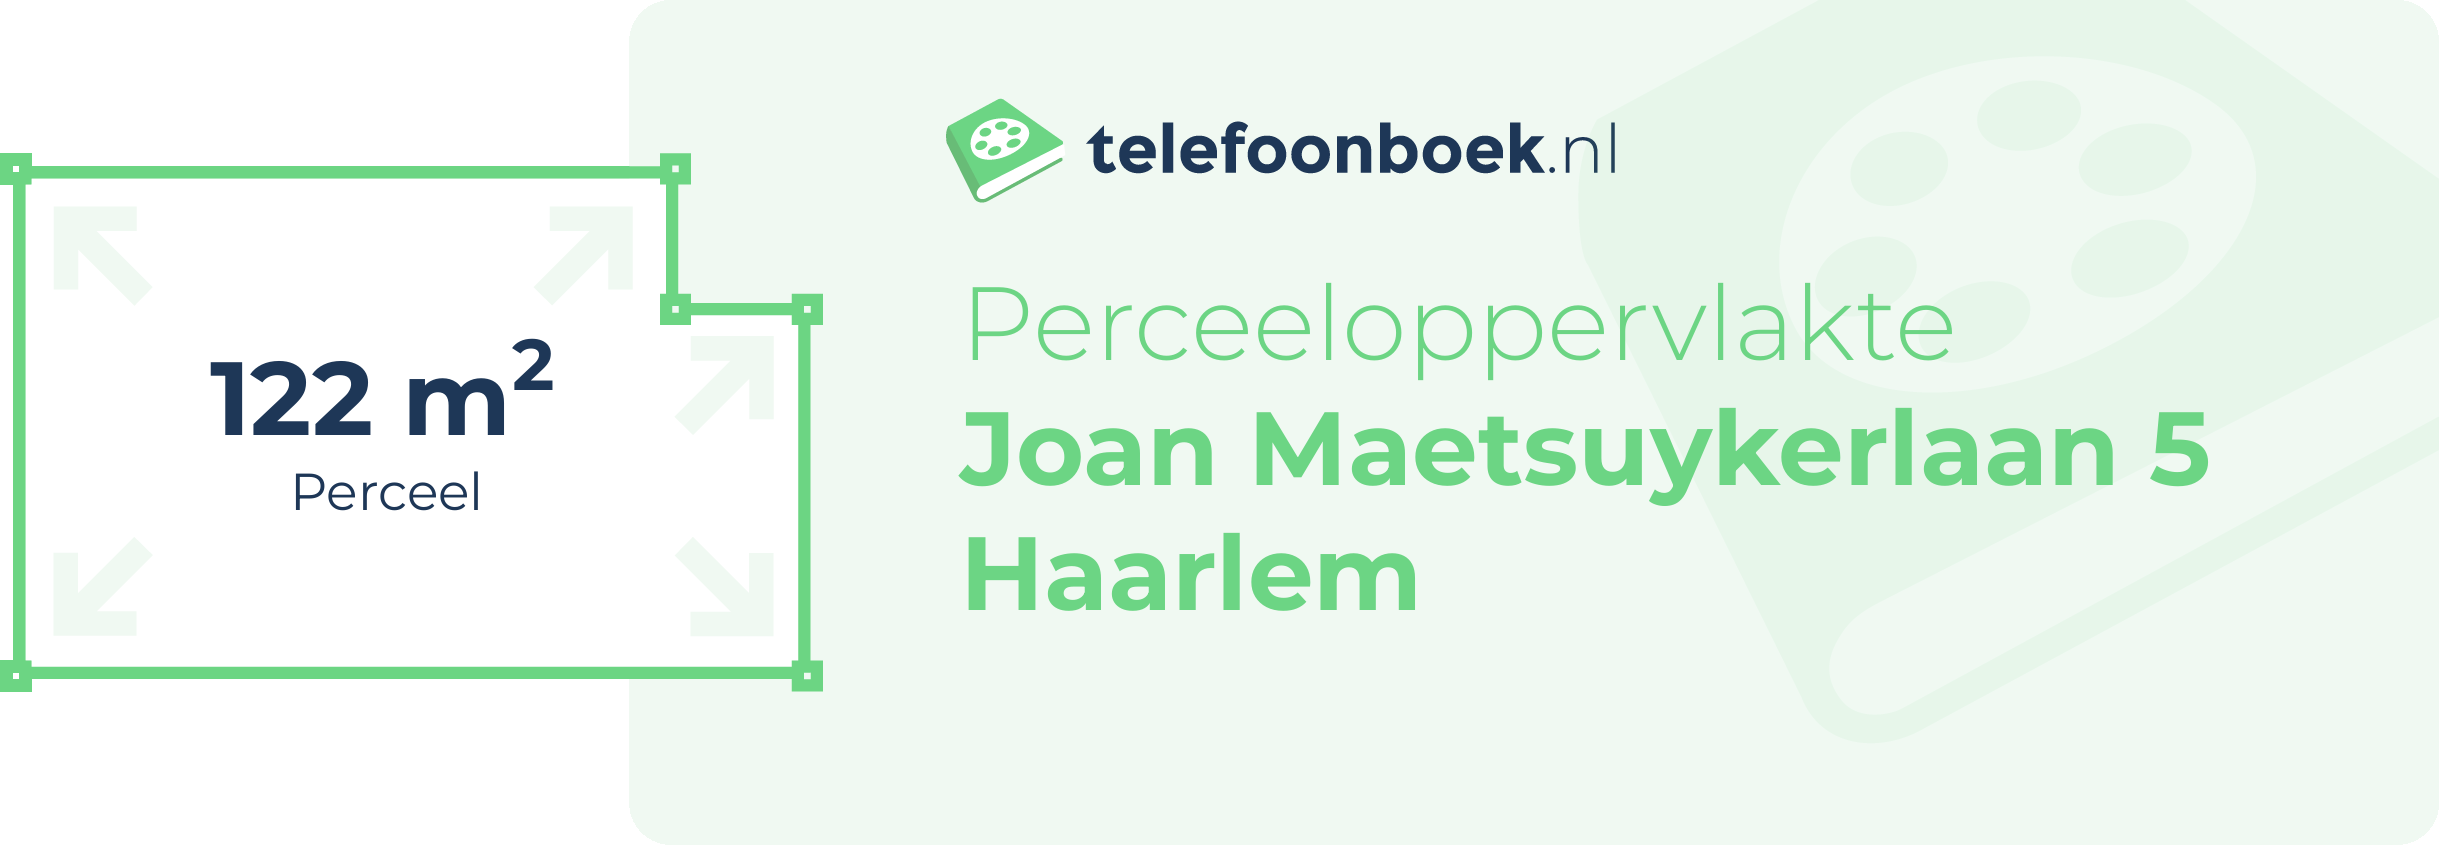 Perceeloppervlakte Joan Maetsuykerlaan 5 Haarlem